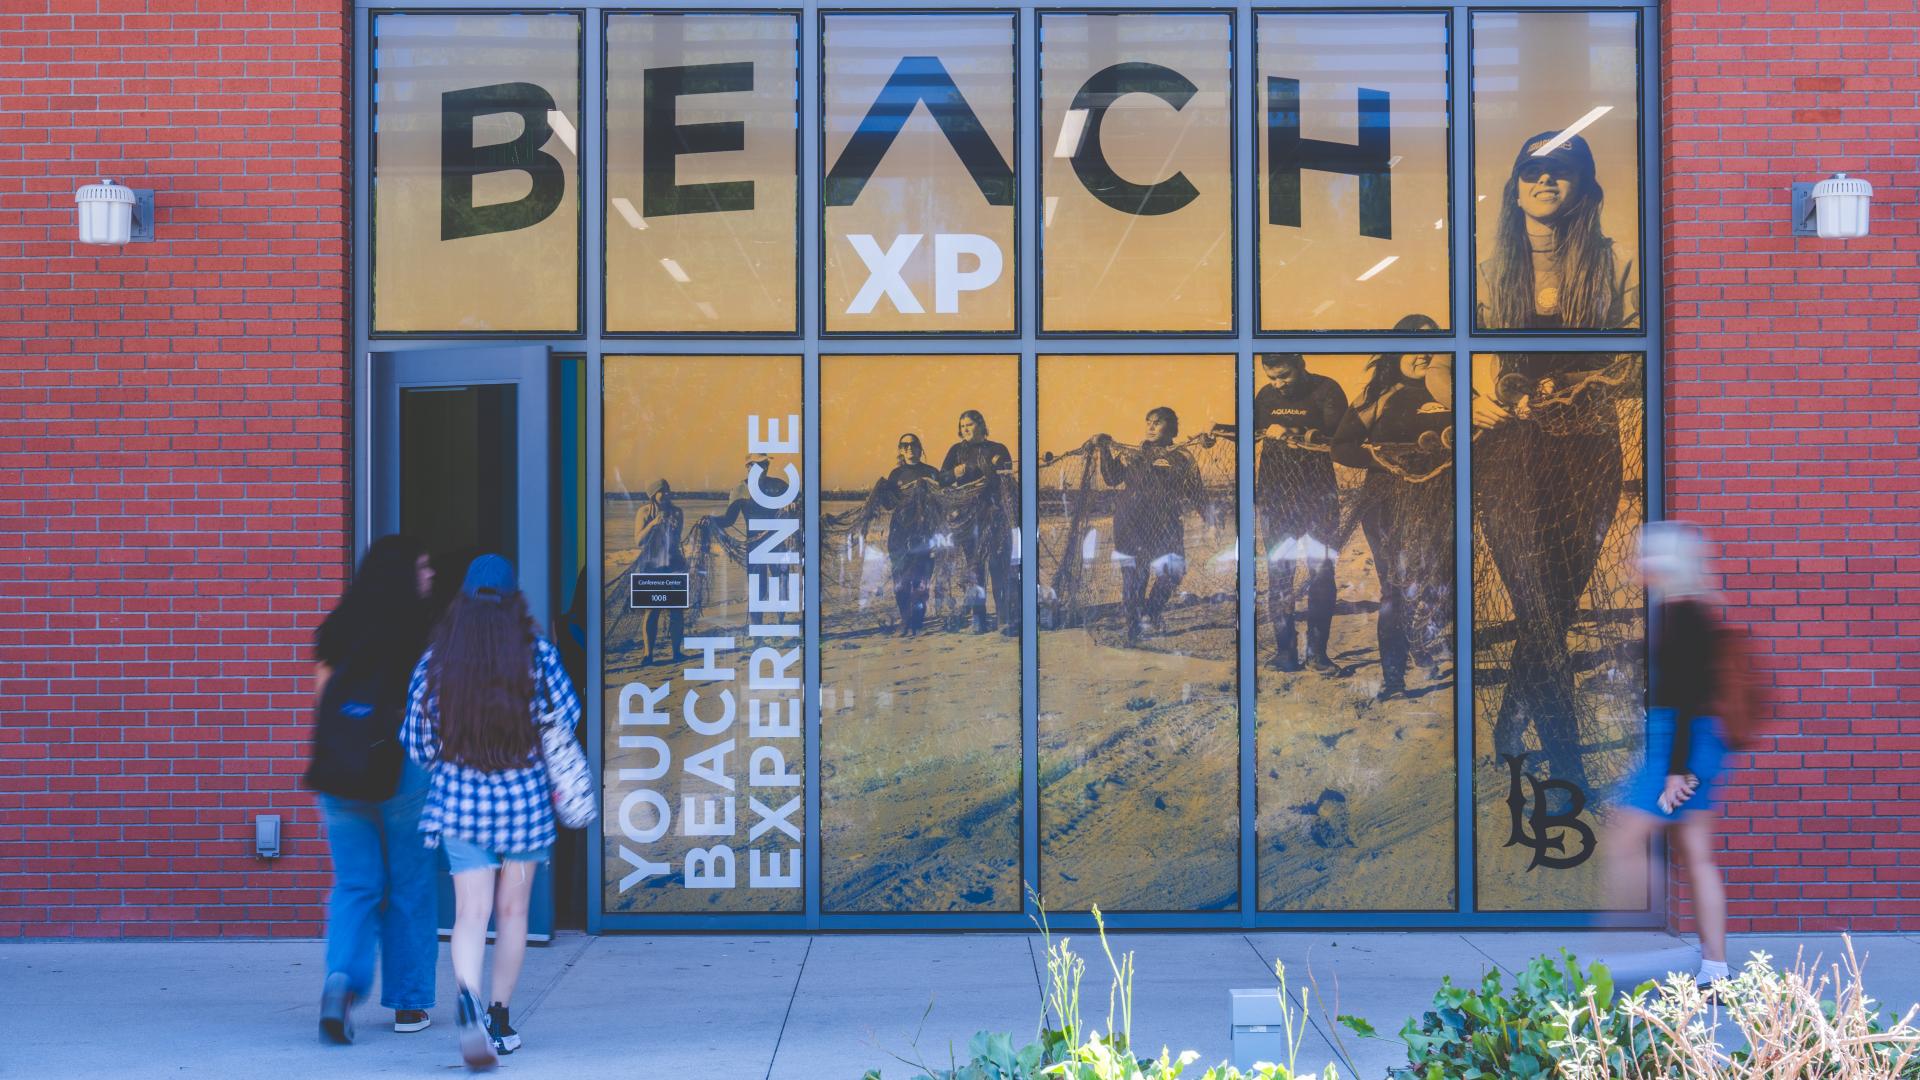 Beach XP Building